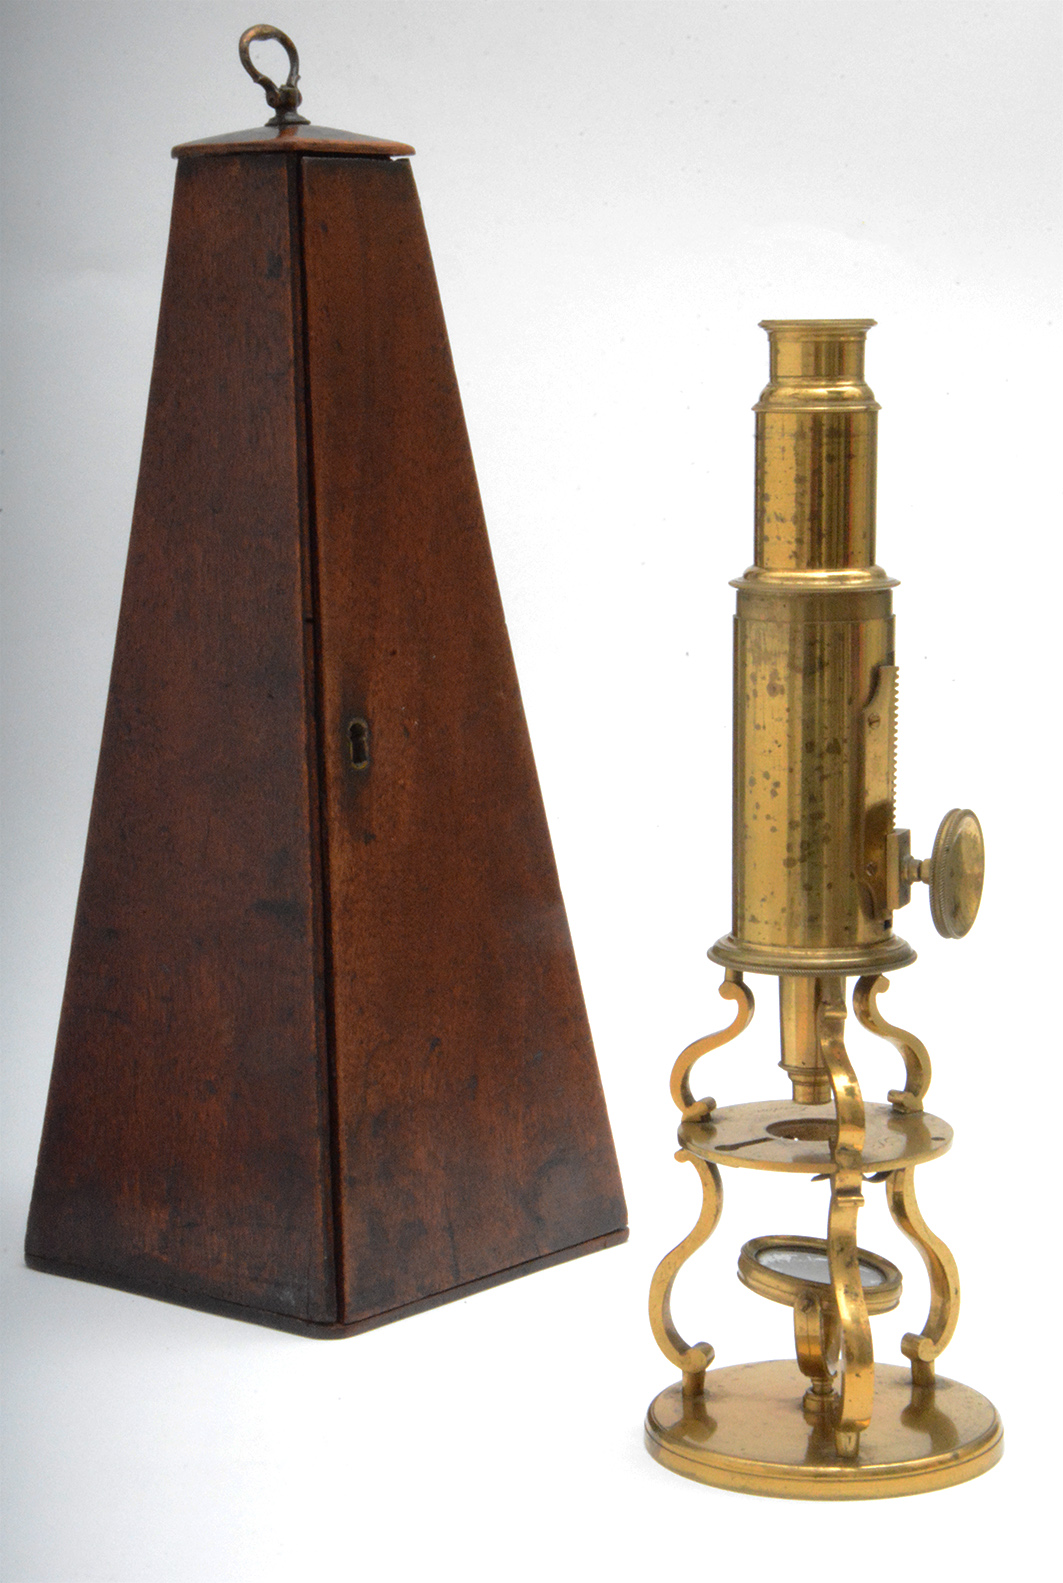 T. Harris & Son, a Culpeper type Microscope